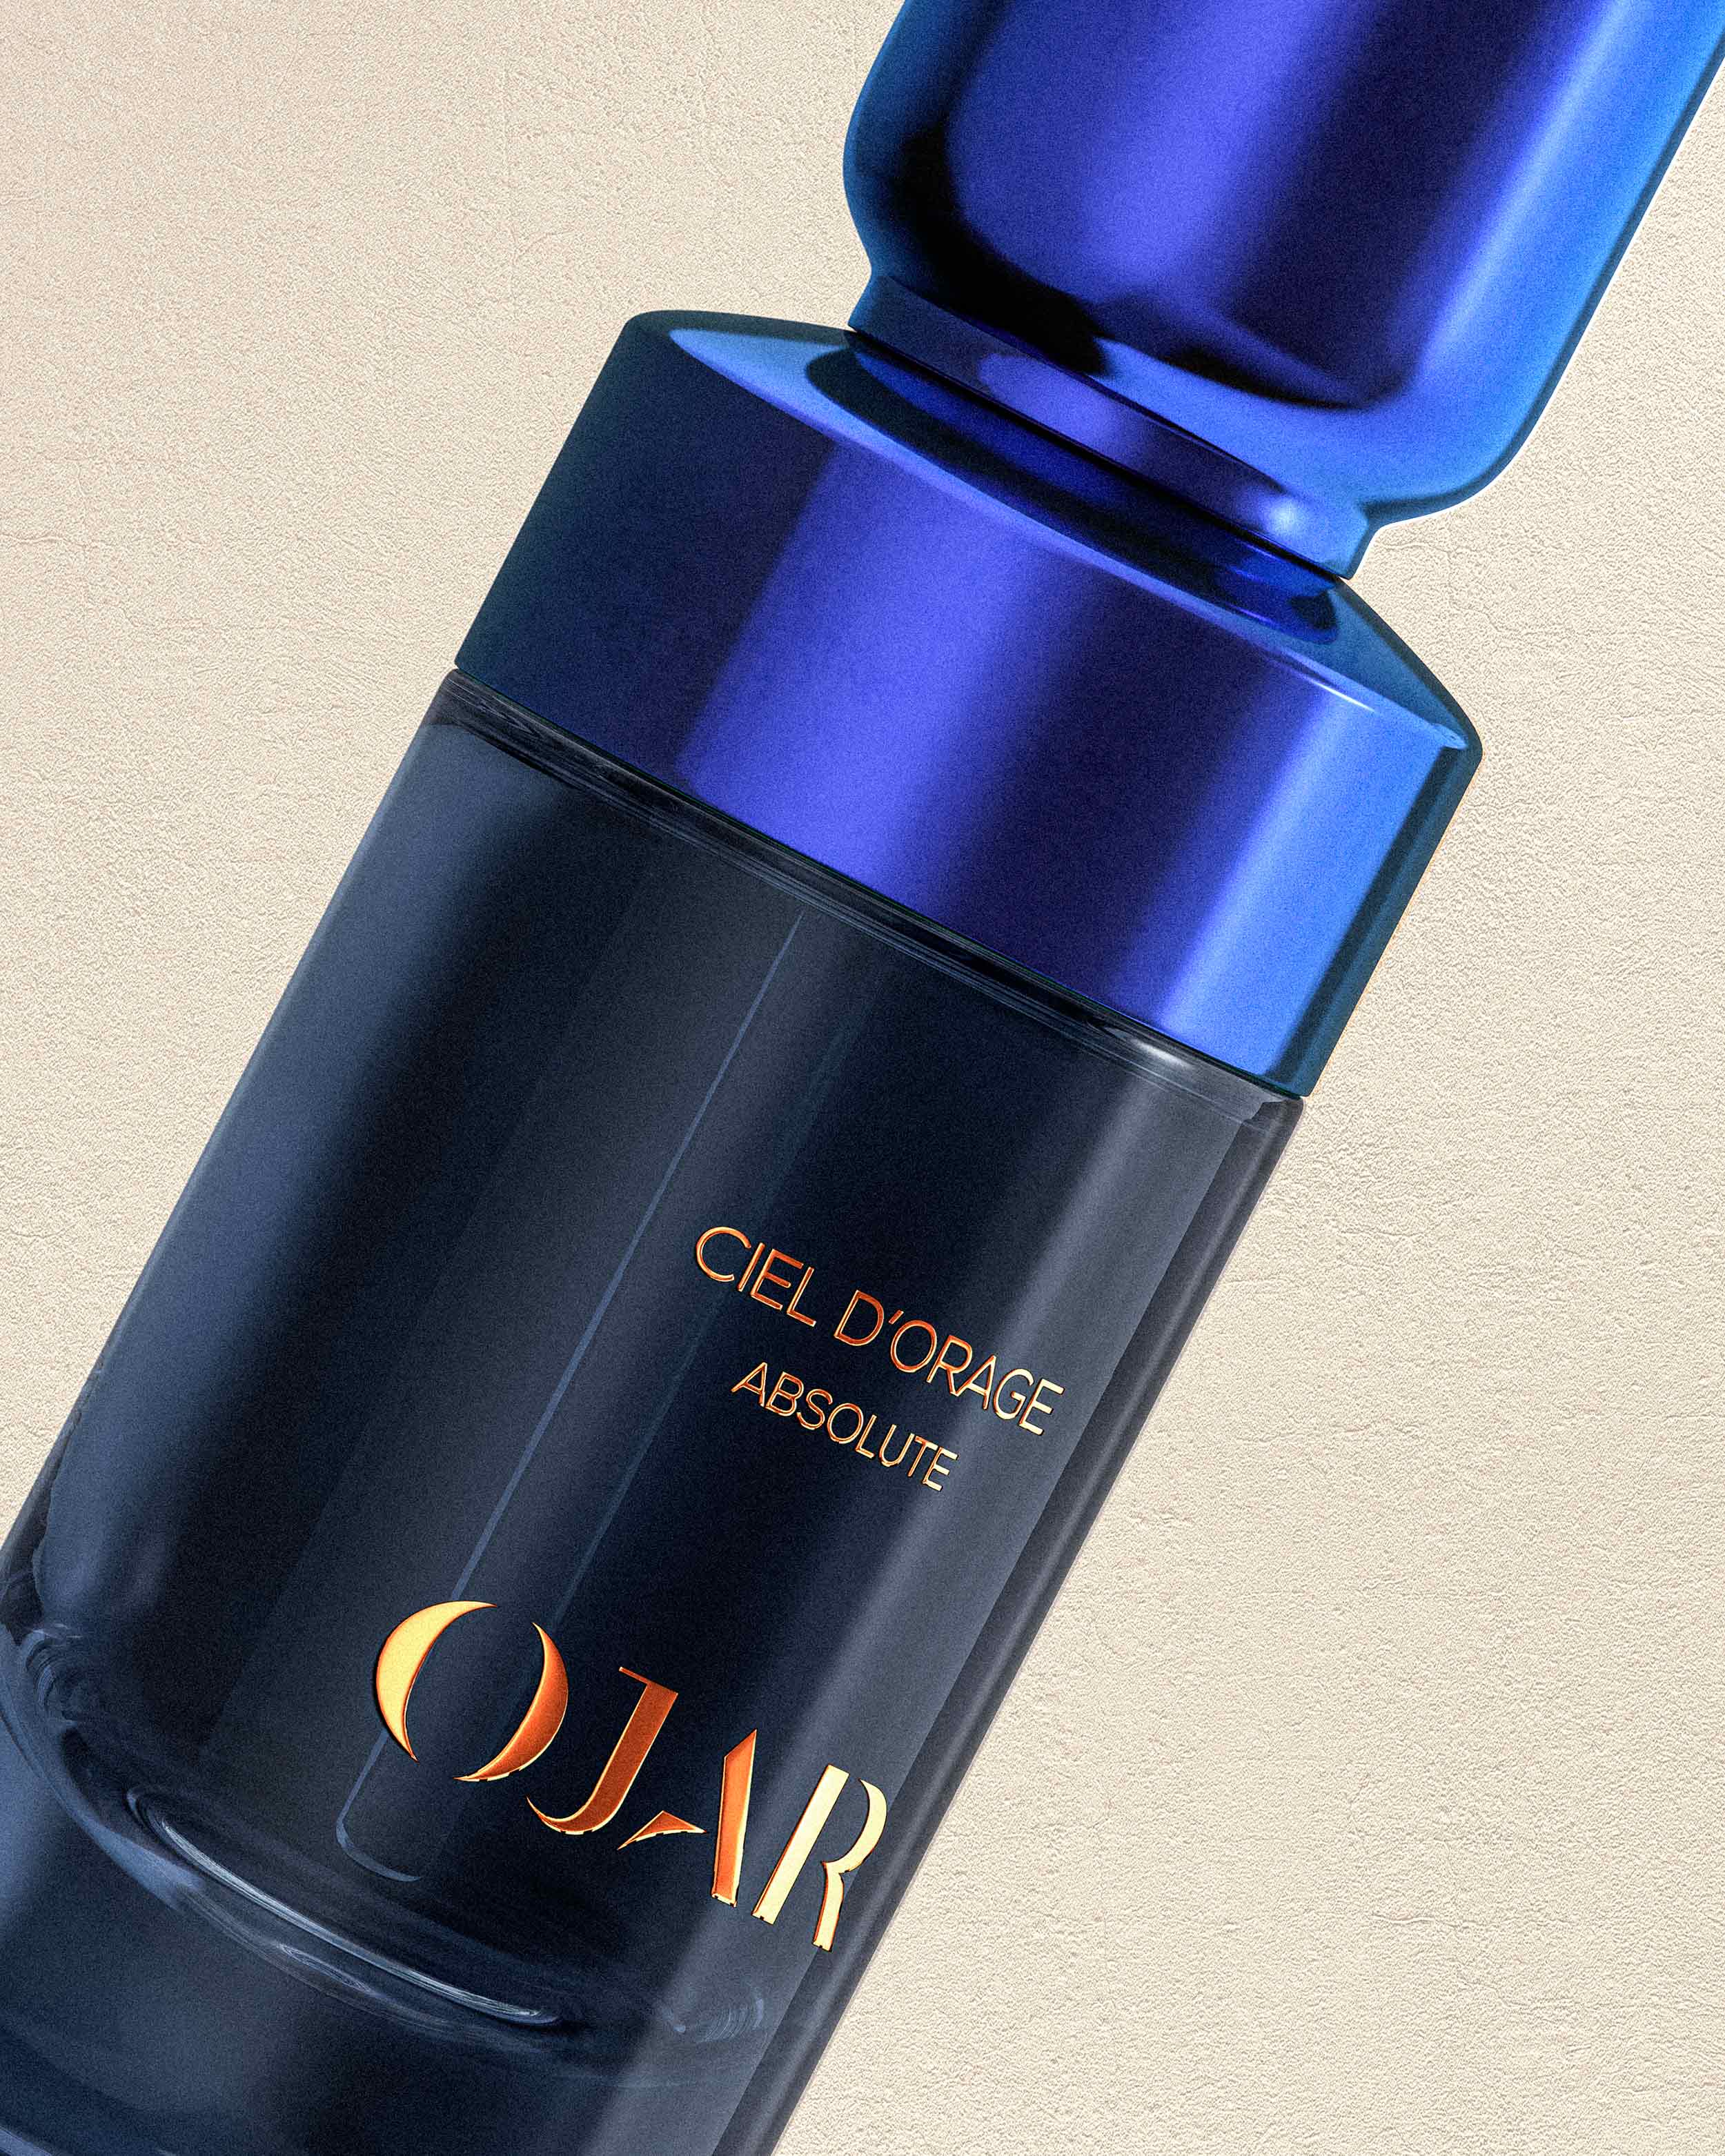 OJAR Absolute Ciel D'Orage Perfume Close Up